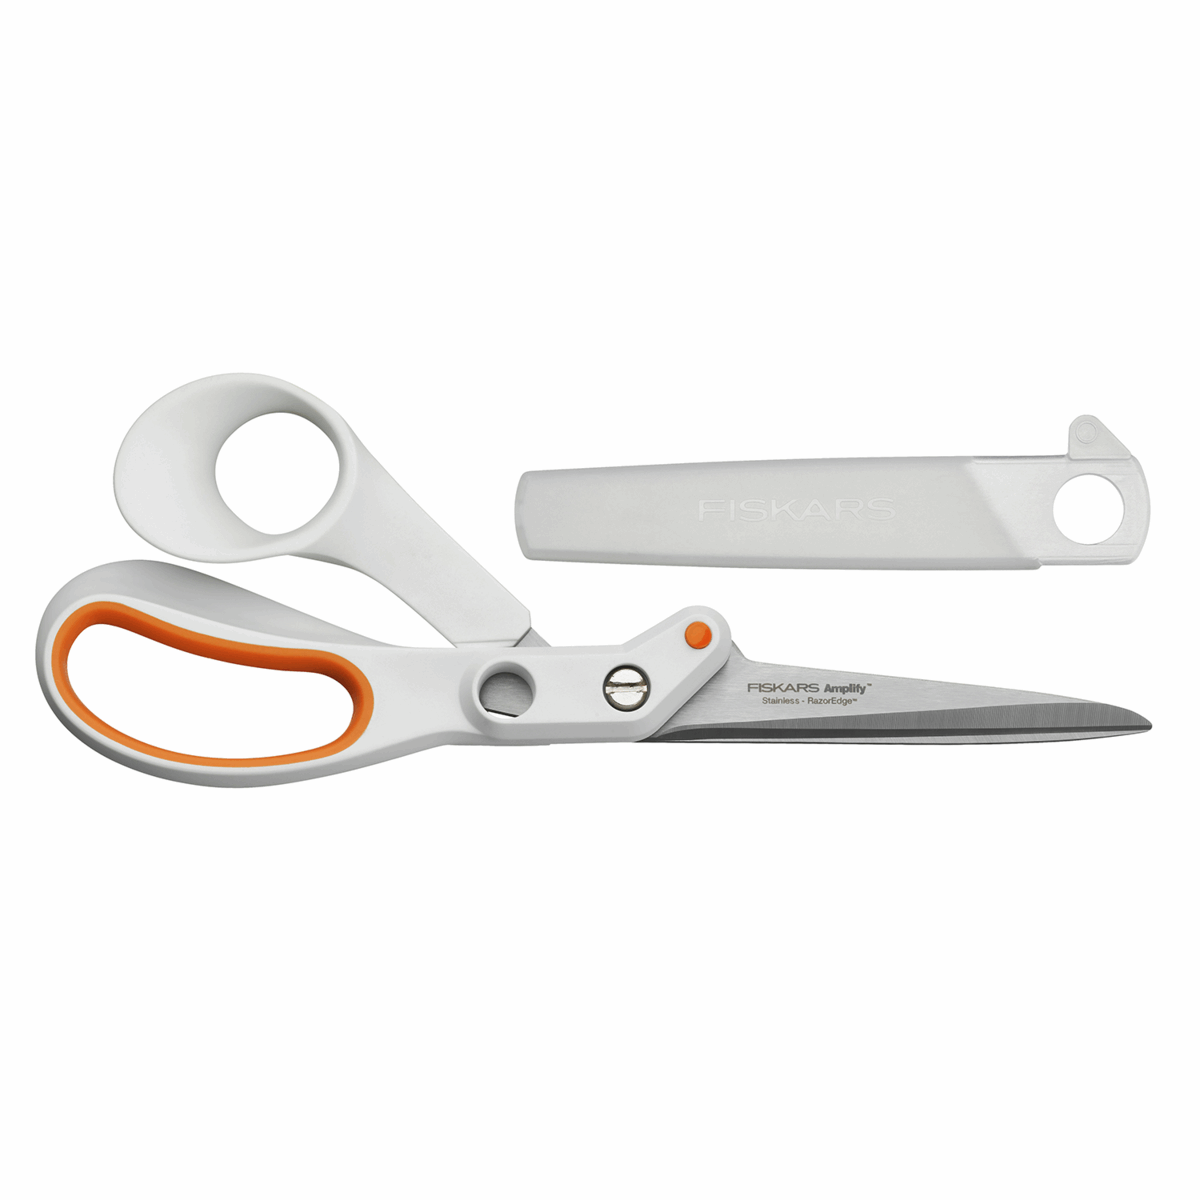 Fiskars Scissors - General Purpose: Amplify: High Performance Precision: 21cm/8.25in